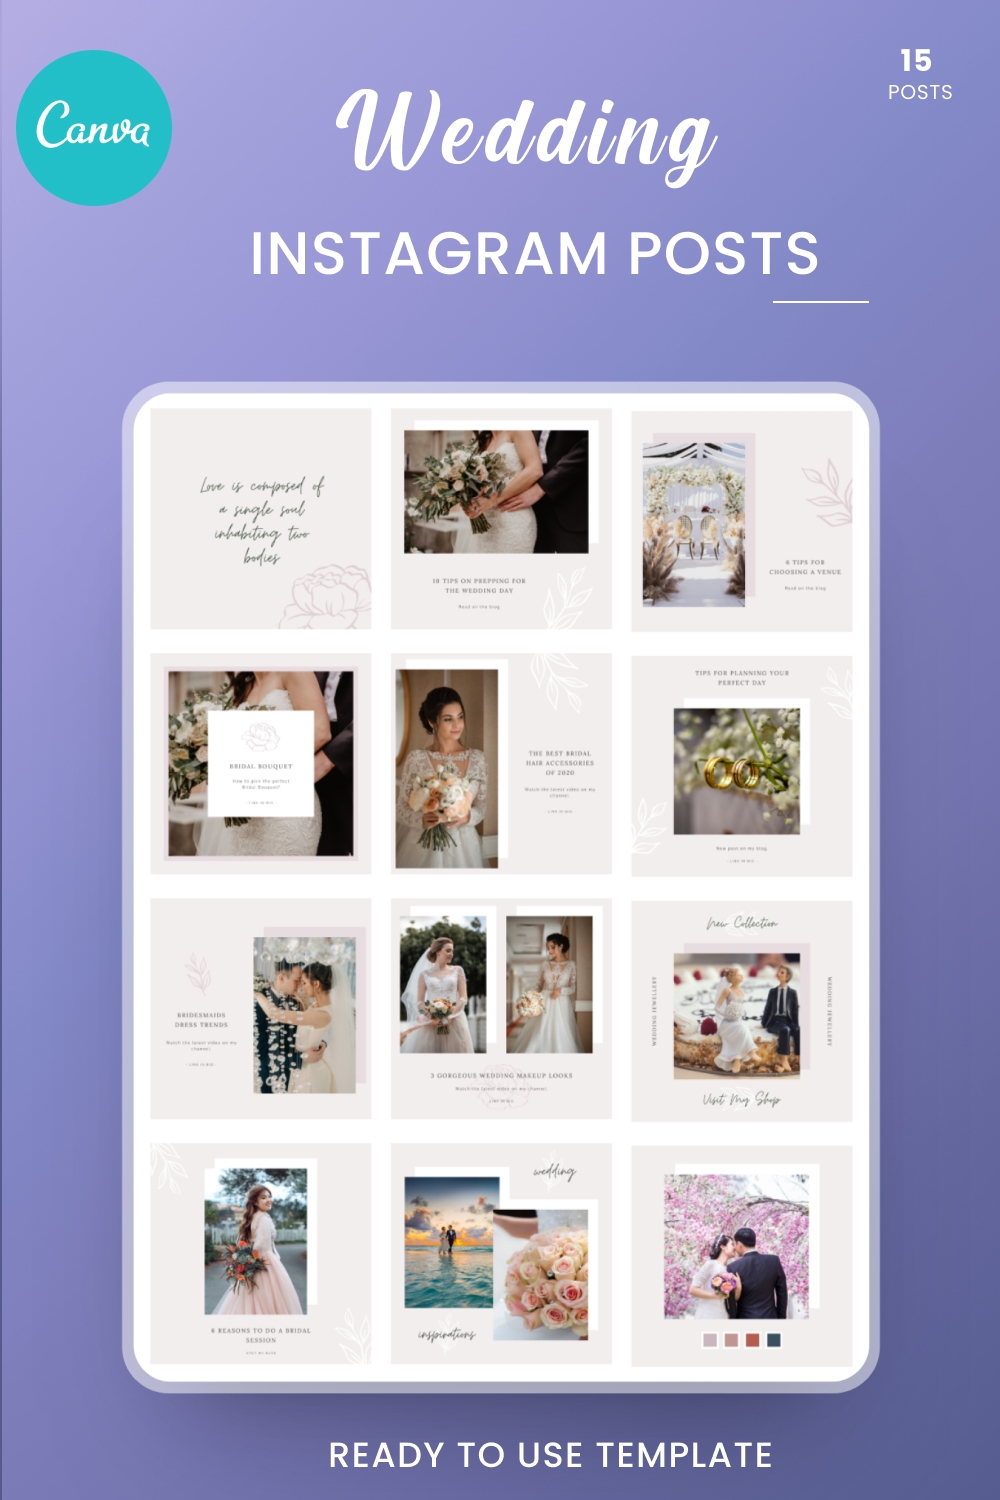 Modern Wedding Canva Template - 15 Instagram Posts pinterest preview image.